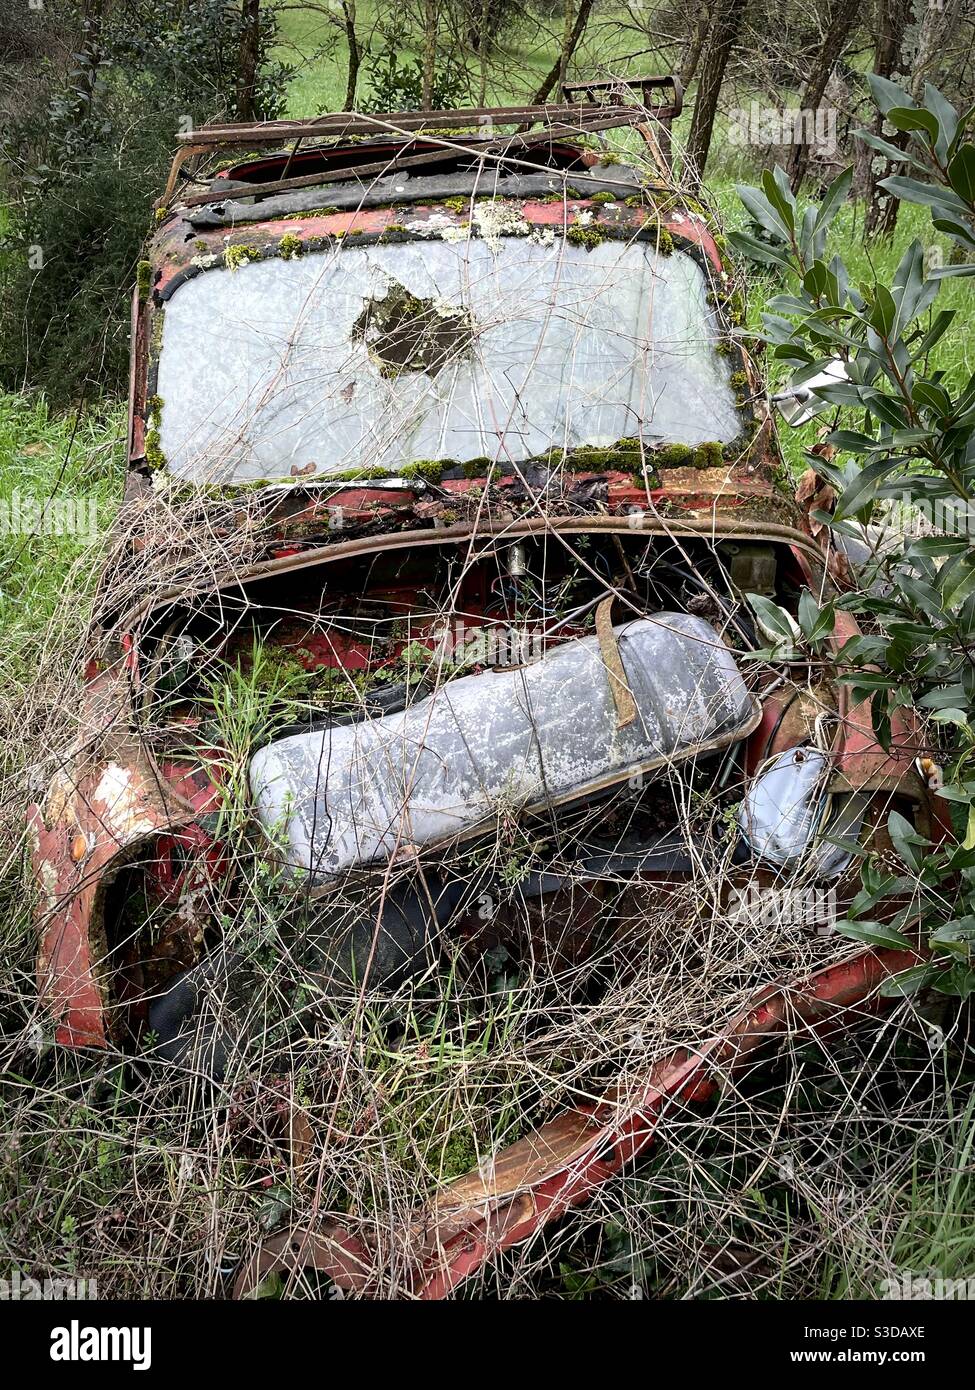 Vecchia Fiat 500 d'epoca abbandonata in una zona rurale In Toscana Foto Stock